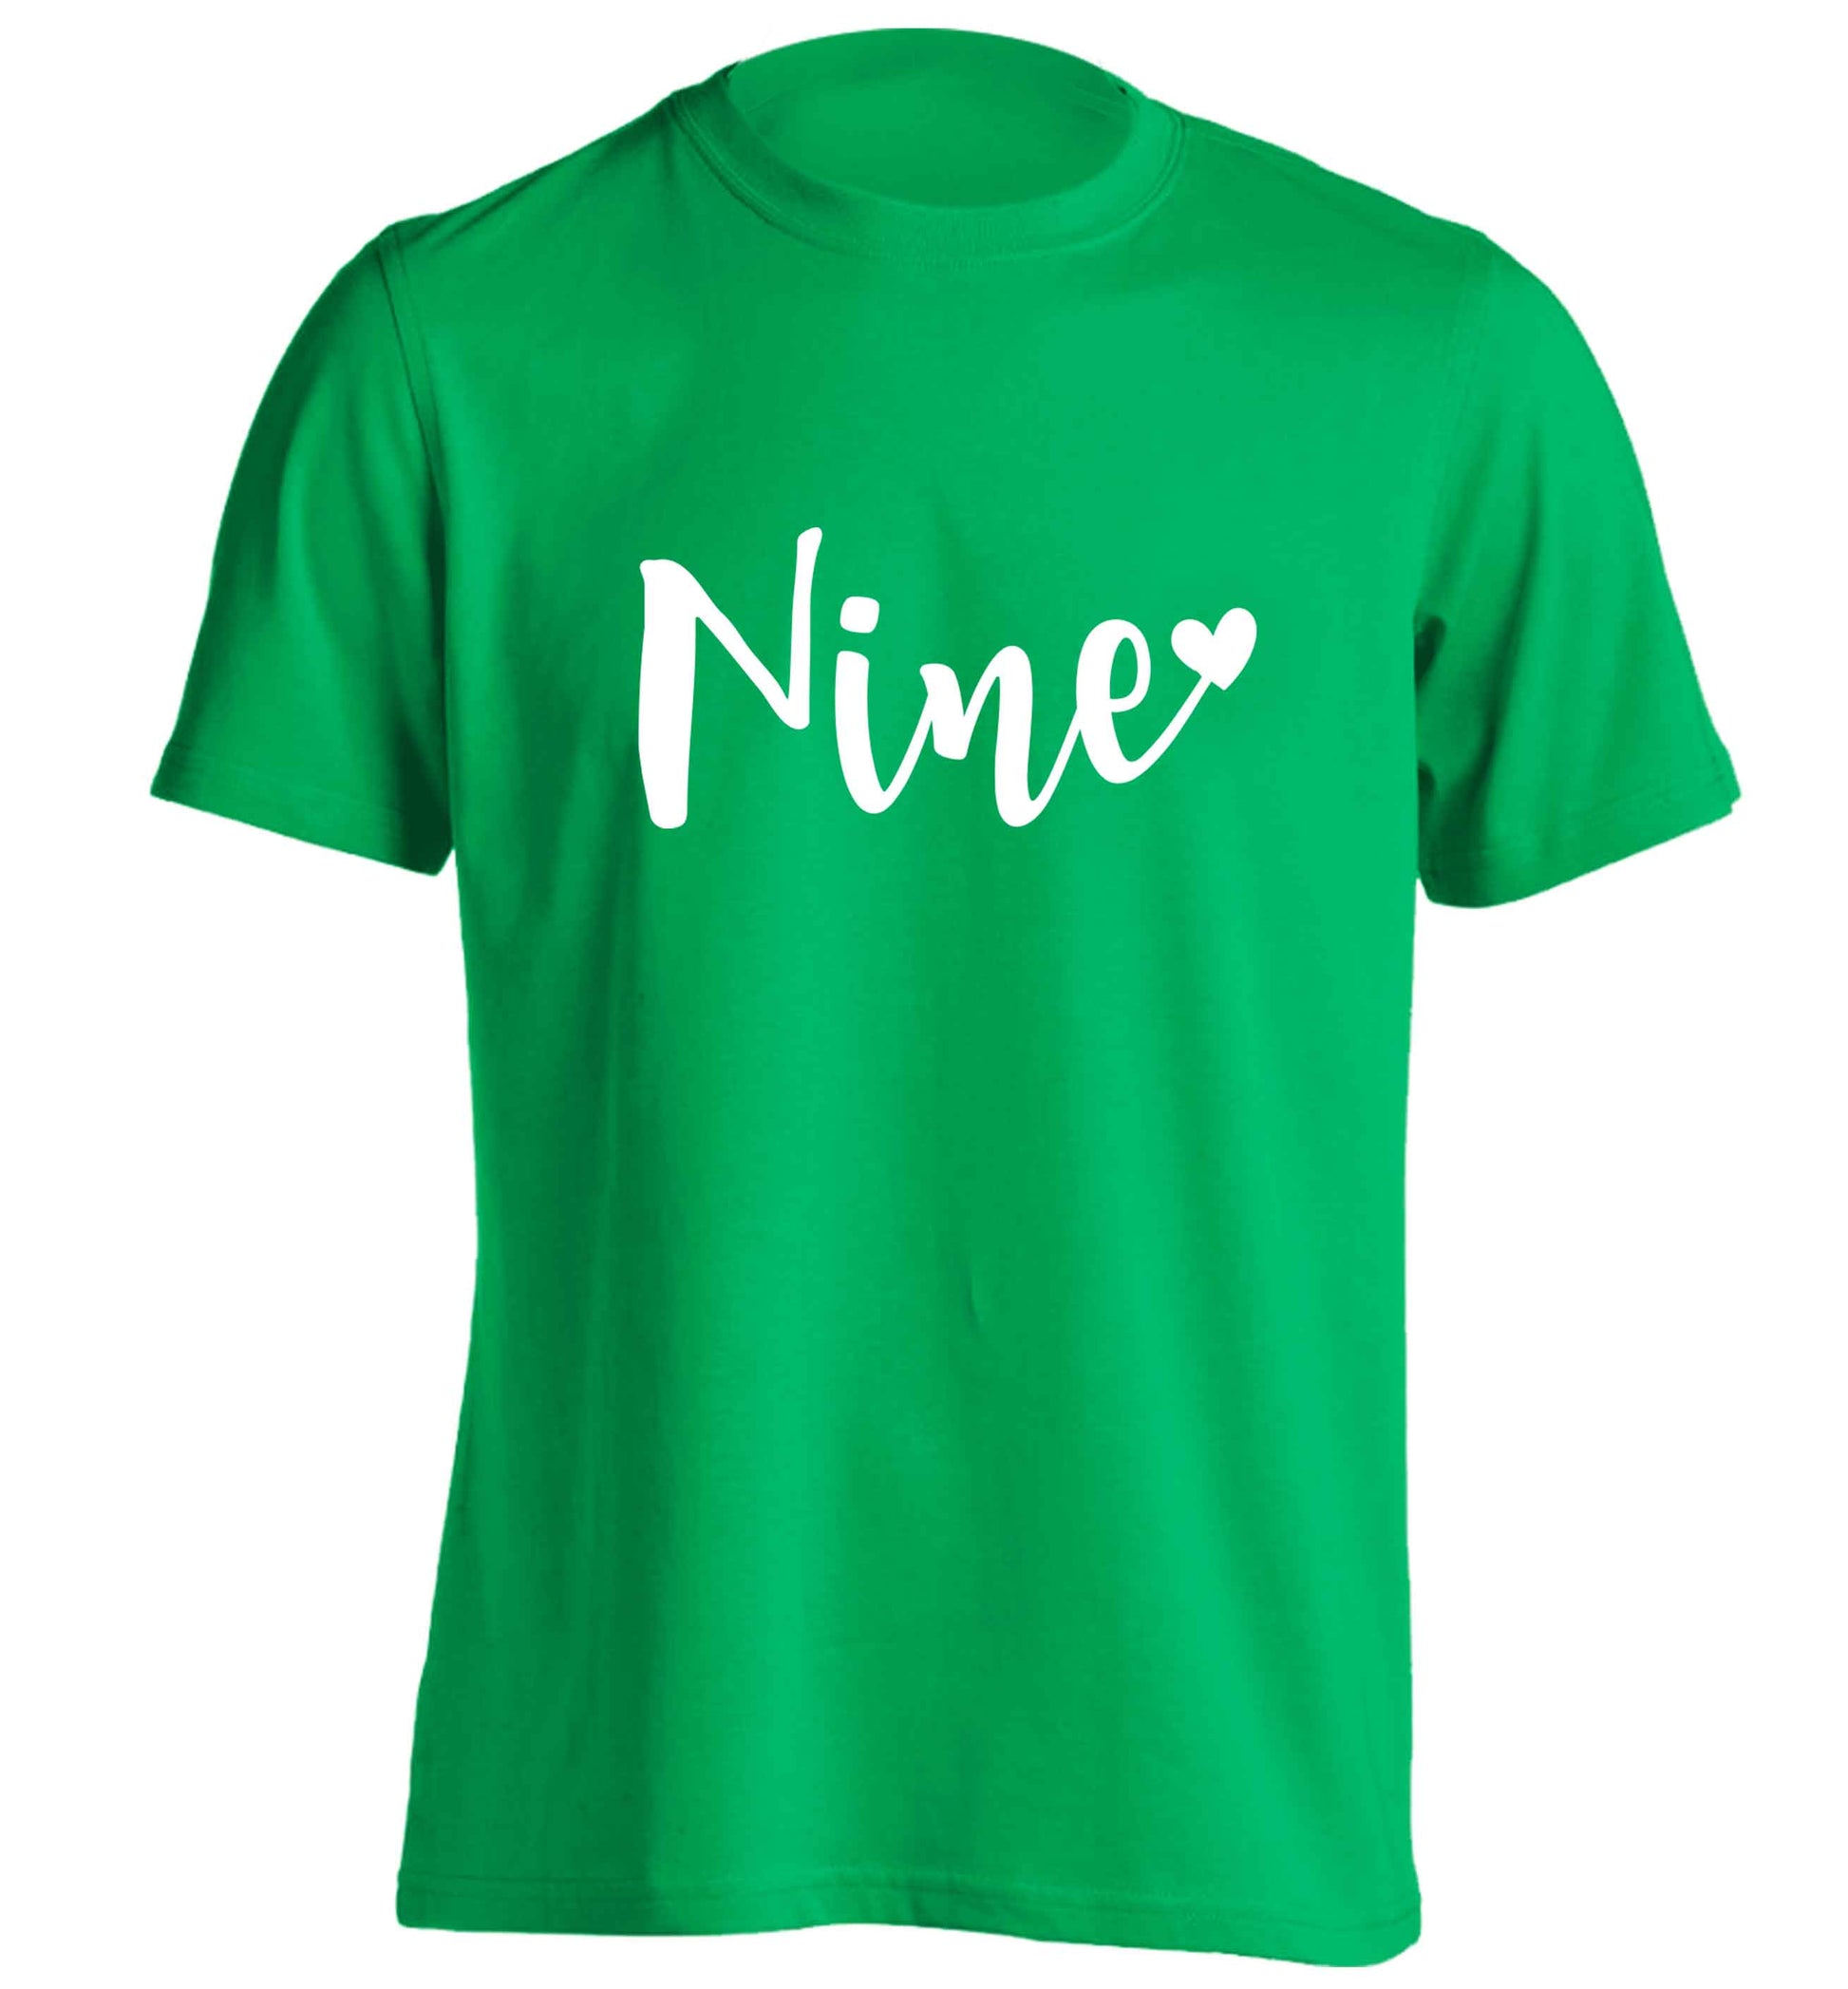 Nine and heart adults unisex green Tshirt 2XL